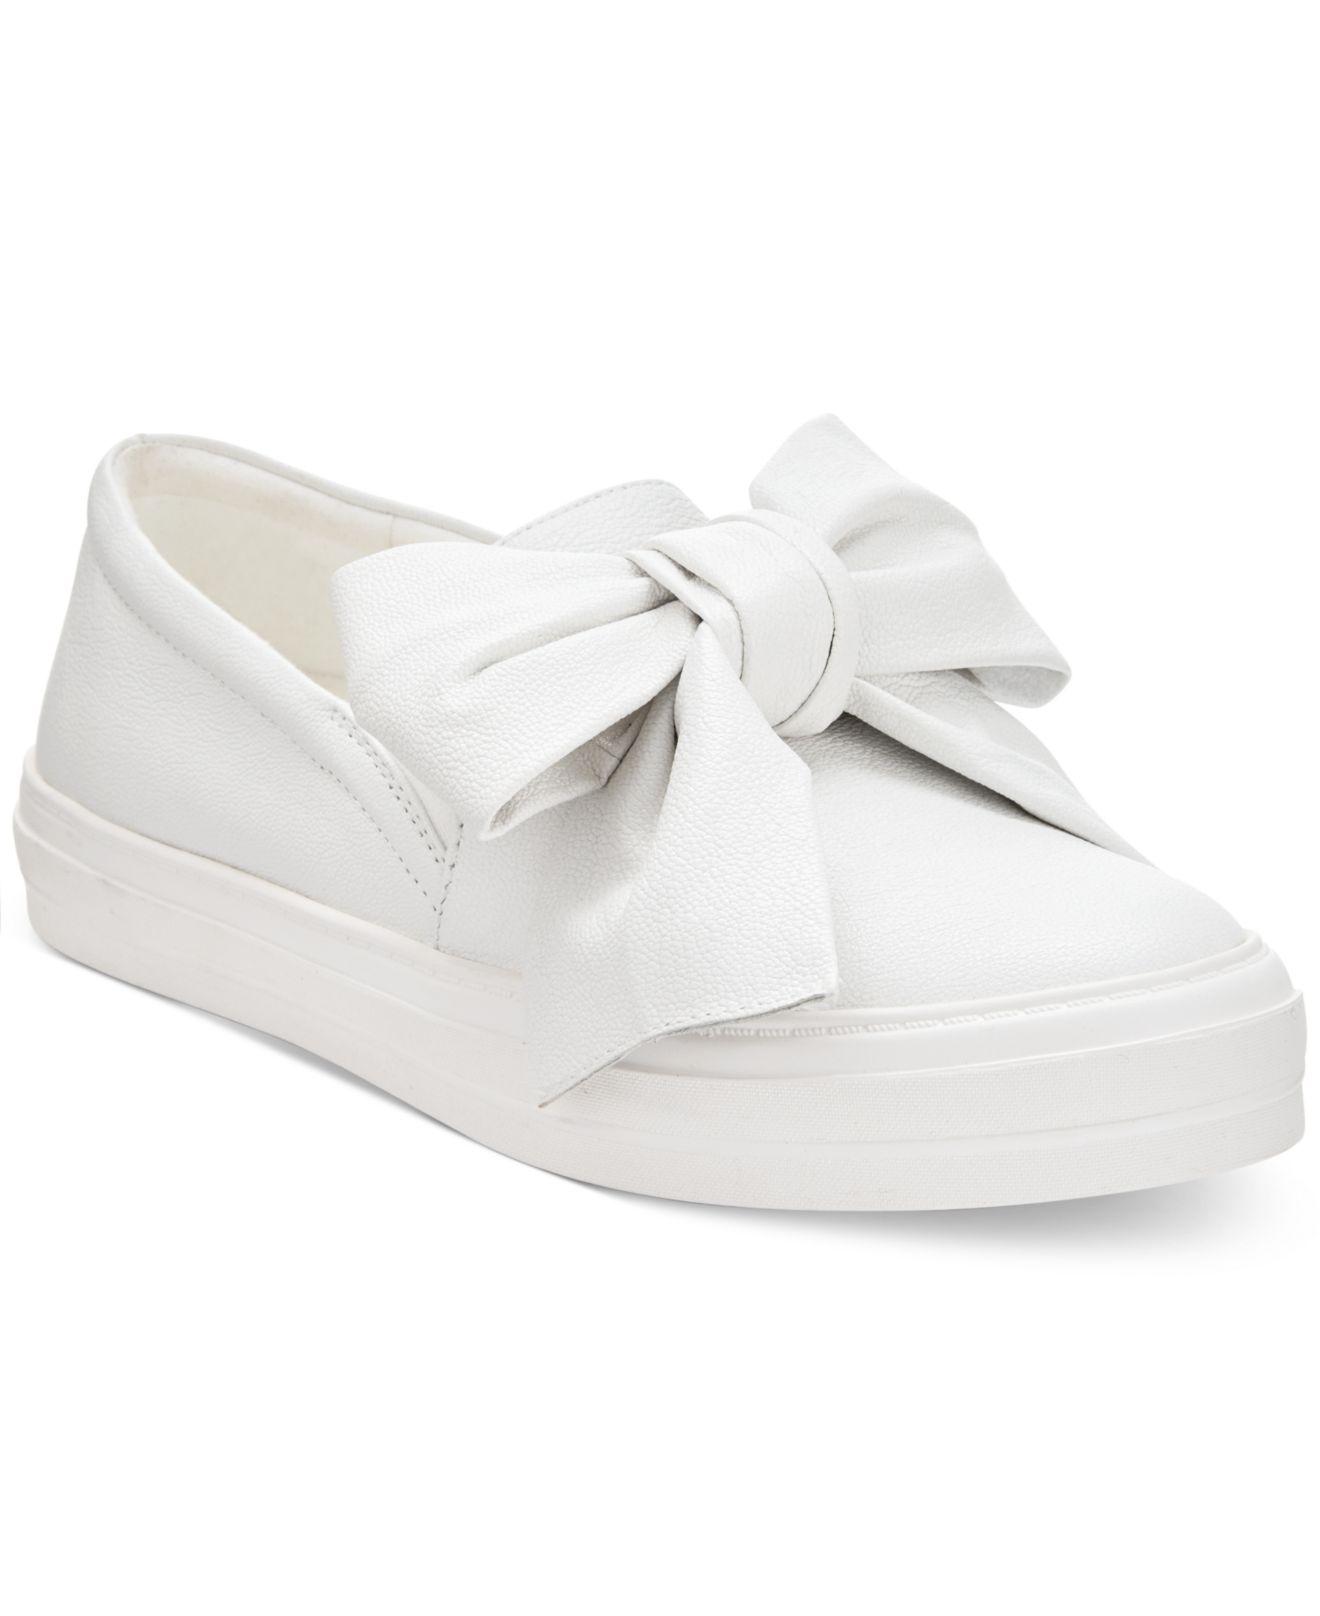 Nine West Onosha Bow Flatform Sneakers in White | Lyst